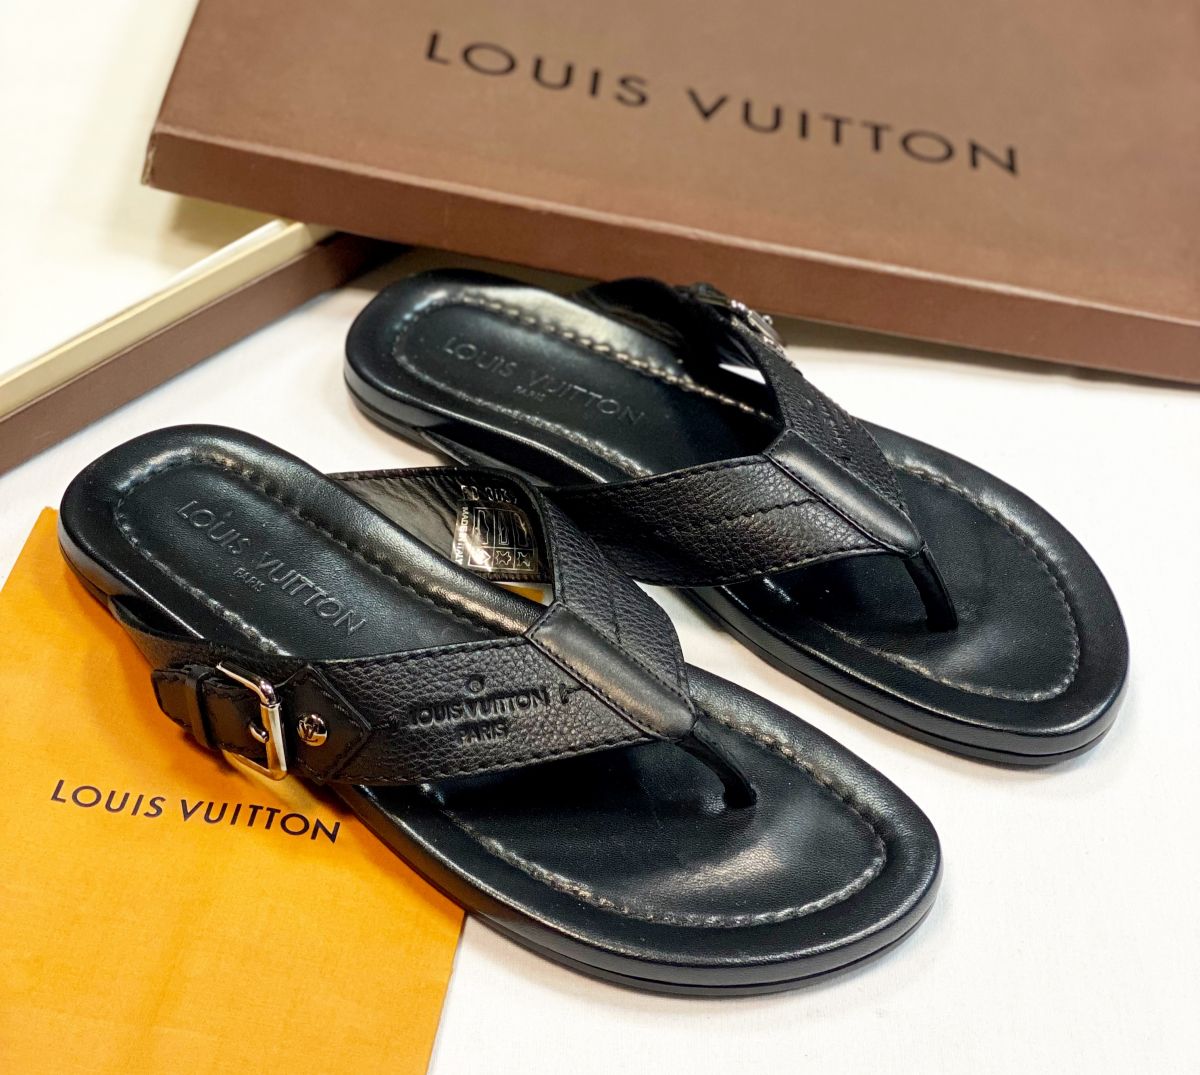 Сабо Louis Vuitton размер 40 цена 10 770 руб 